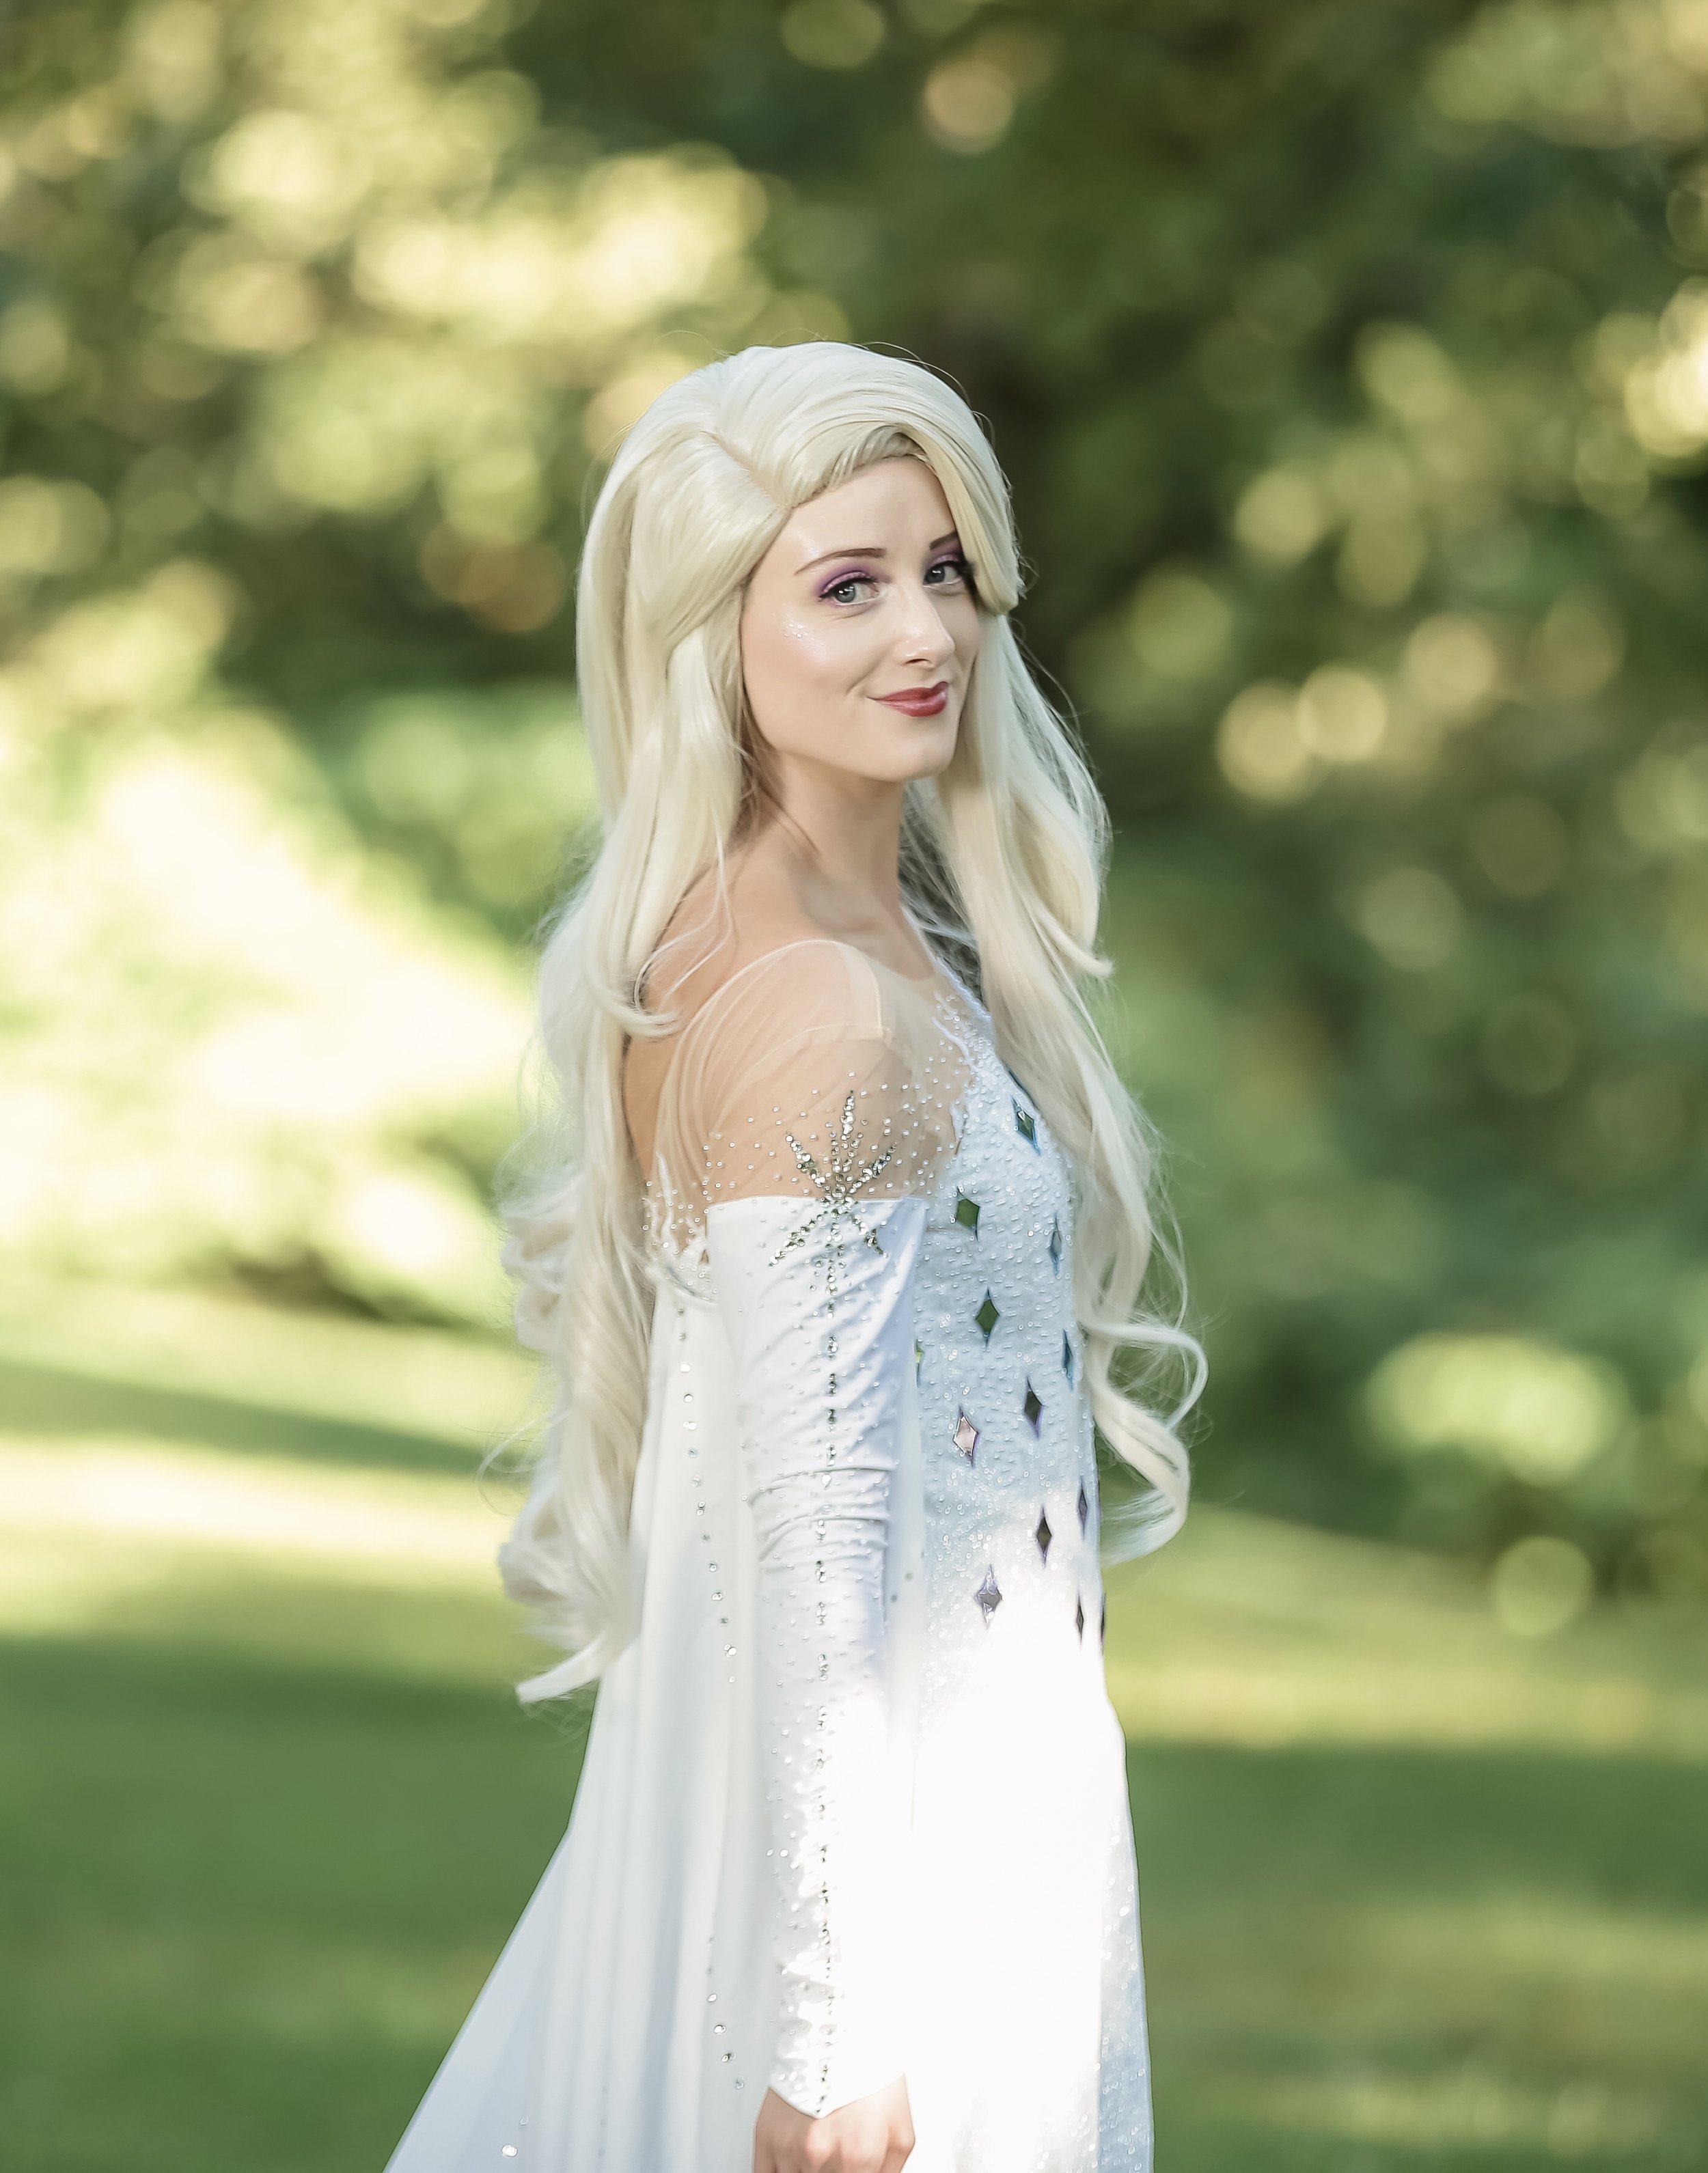 Brittian new Elsa final edit 2020 (25 of 37) (1).jpg